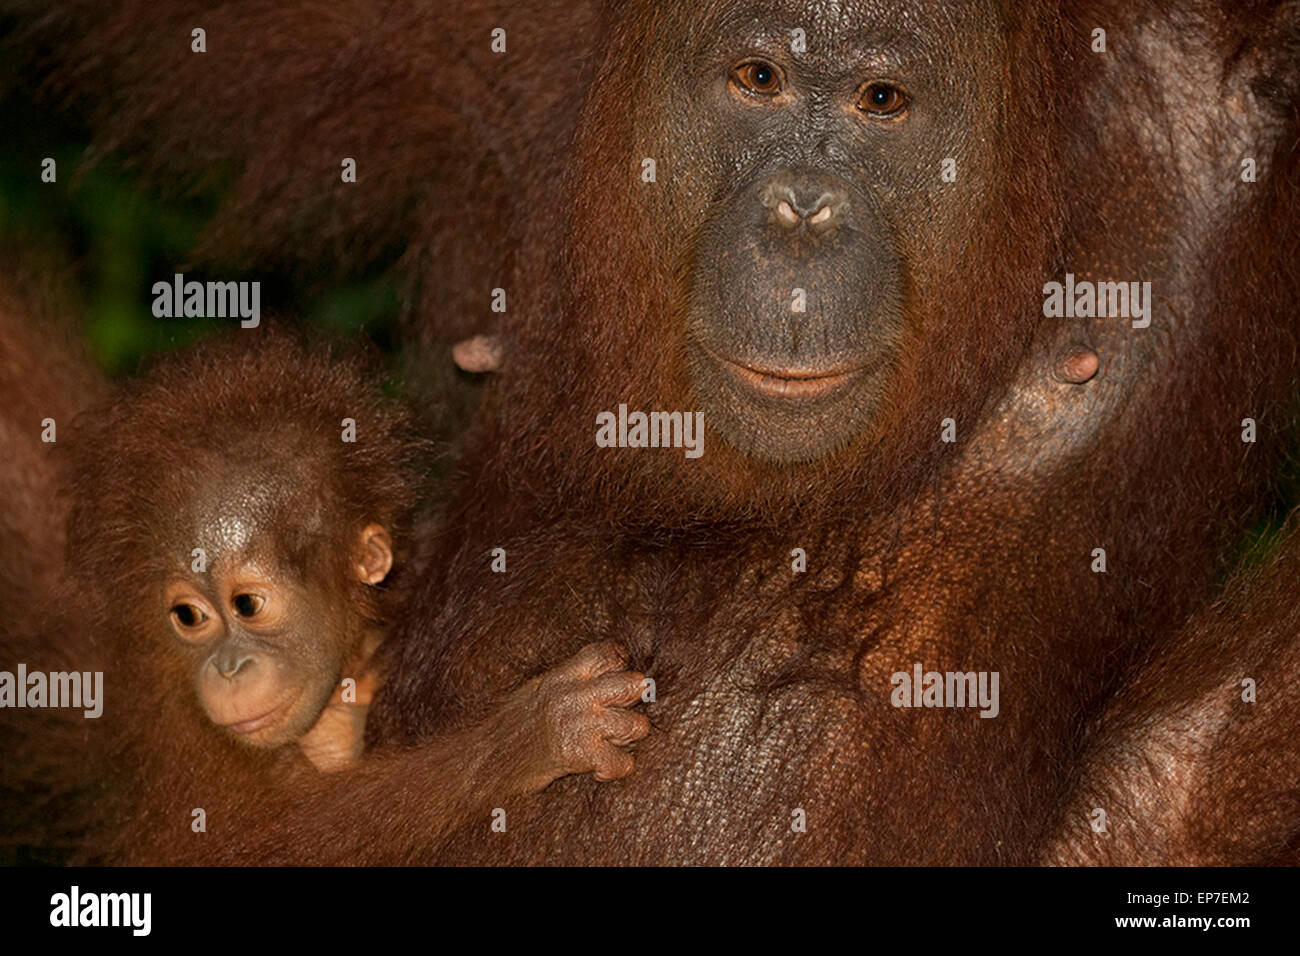 Orangutan Mother and Child Stock Photo